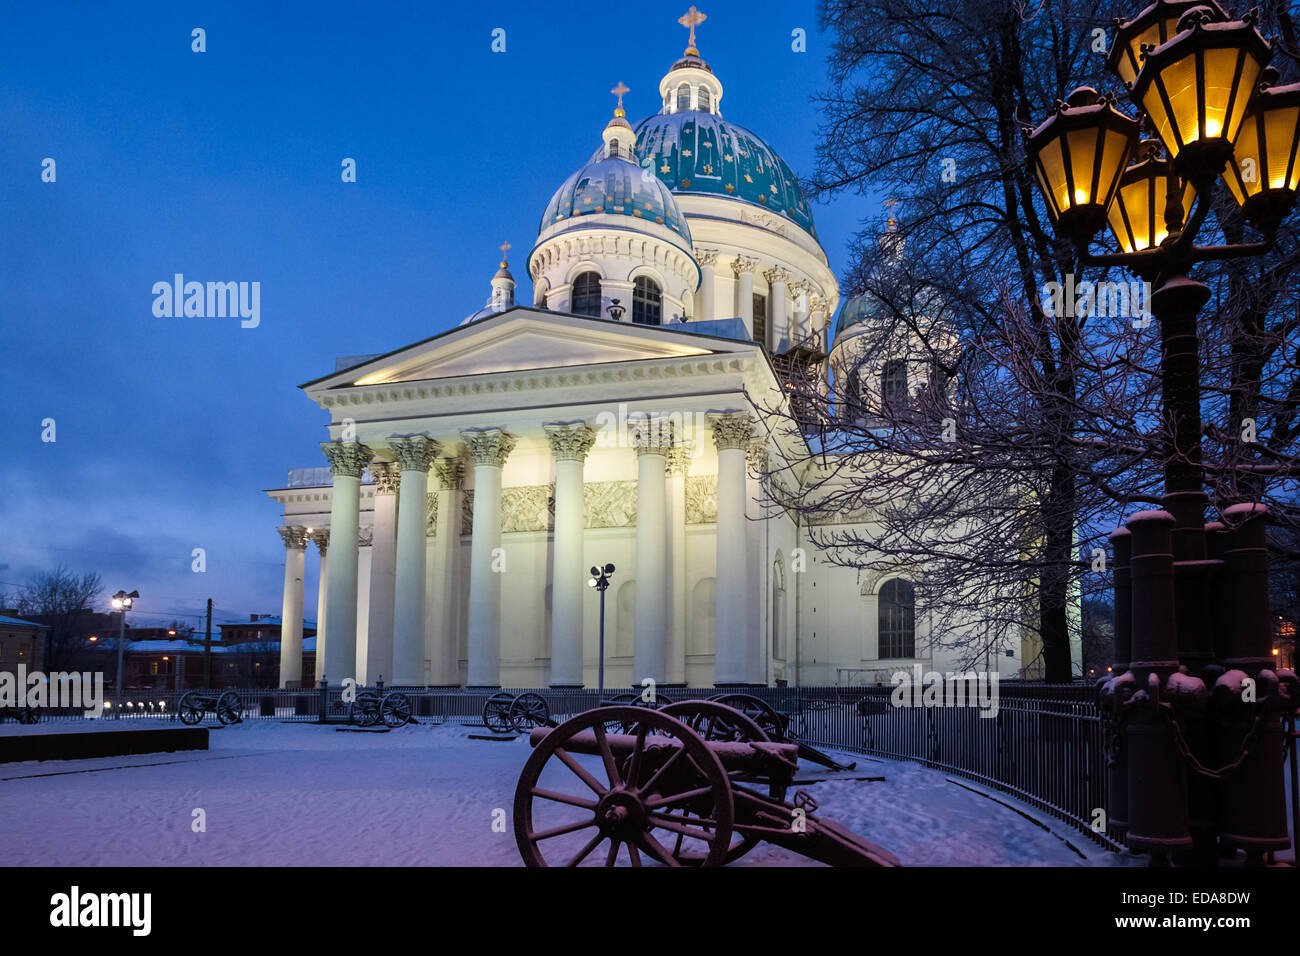 Saint-Petersburg, RUSSIA - Dec 30 2014.Trinity Cathedral, Saint Petersburg sometimes called the Troitsky Cathedral, on Dec 30, 2014 in Saint-Petersburg, Russia Stock Photo